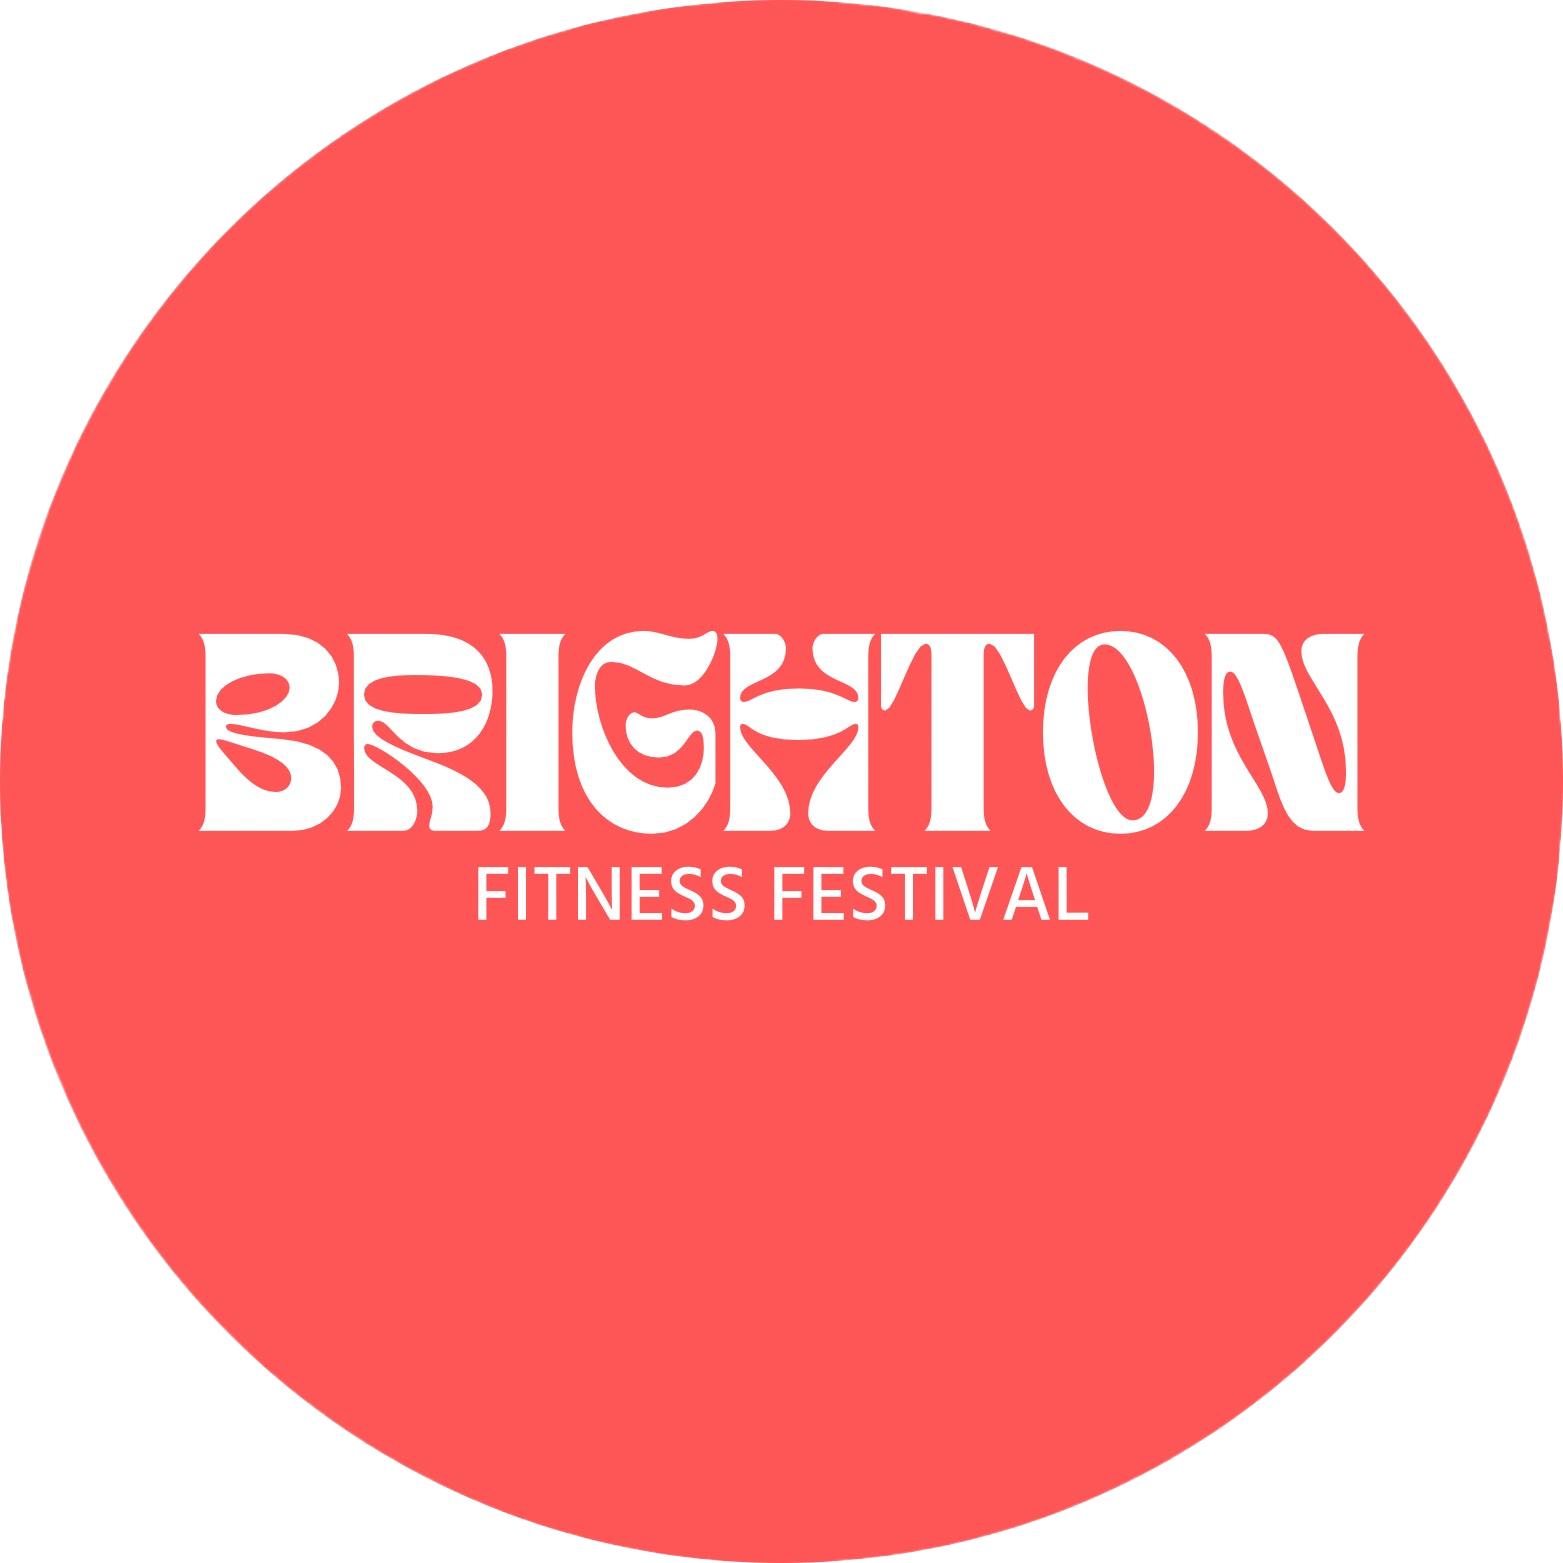 Brighton Fitness Festival